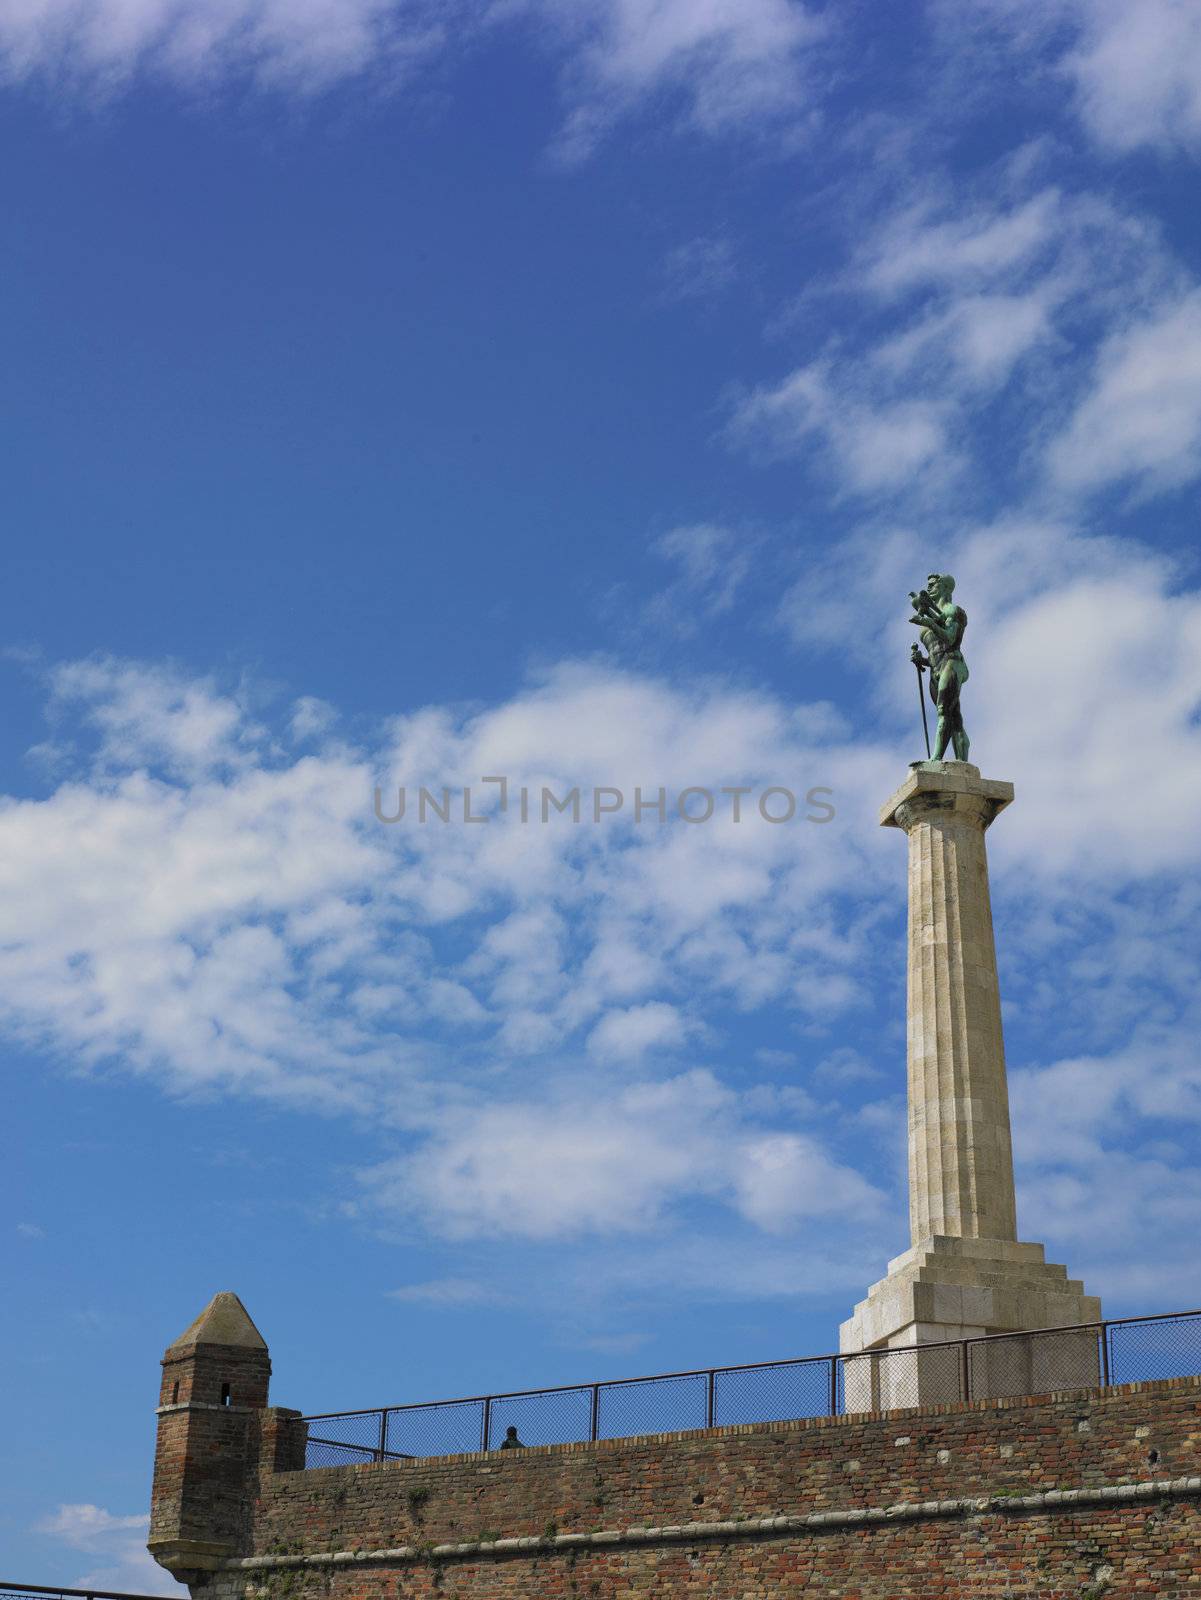 The Victor, Landmark symbol of Belgrade, Serbia by adamr